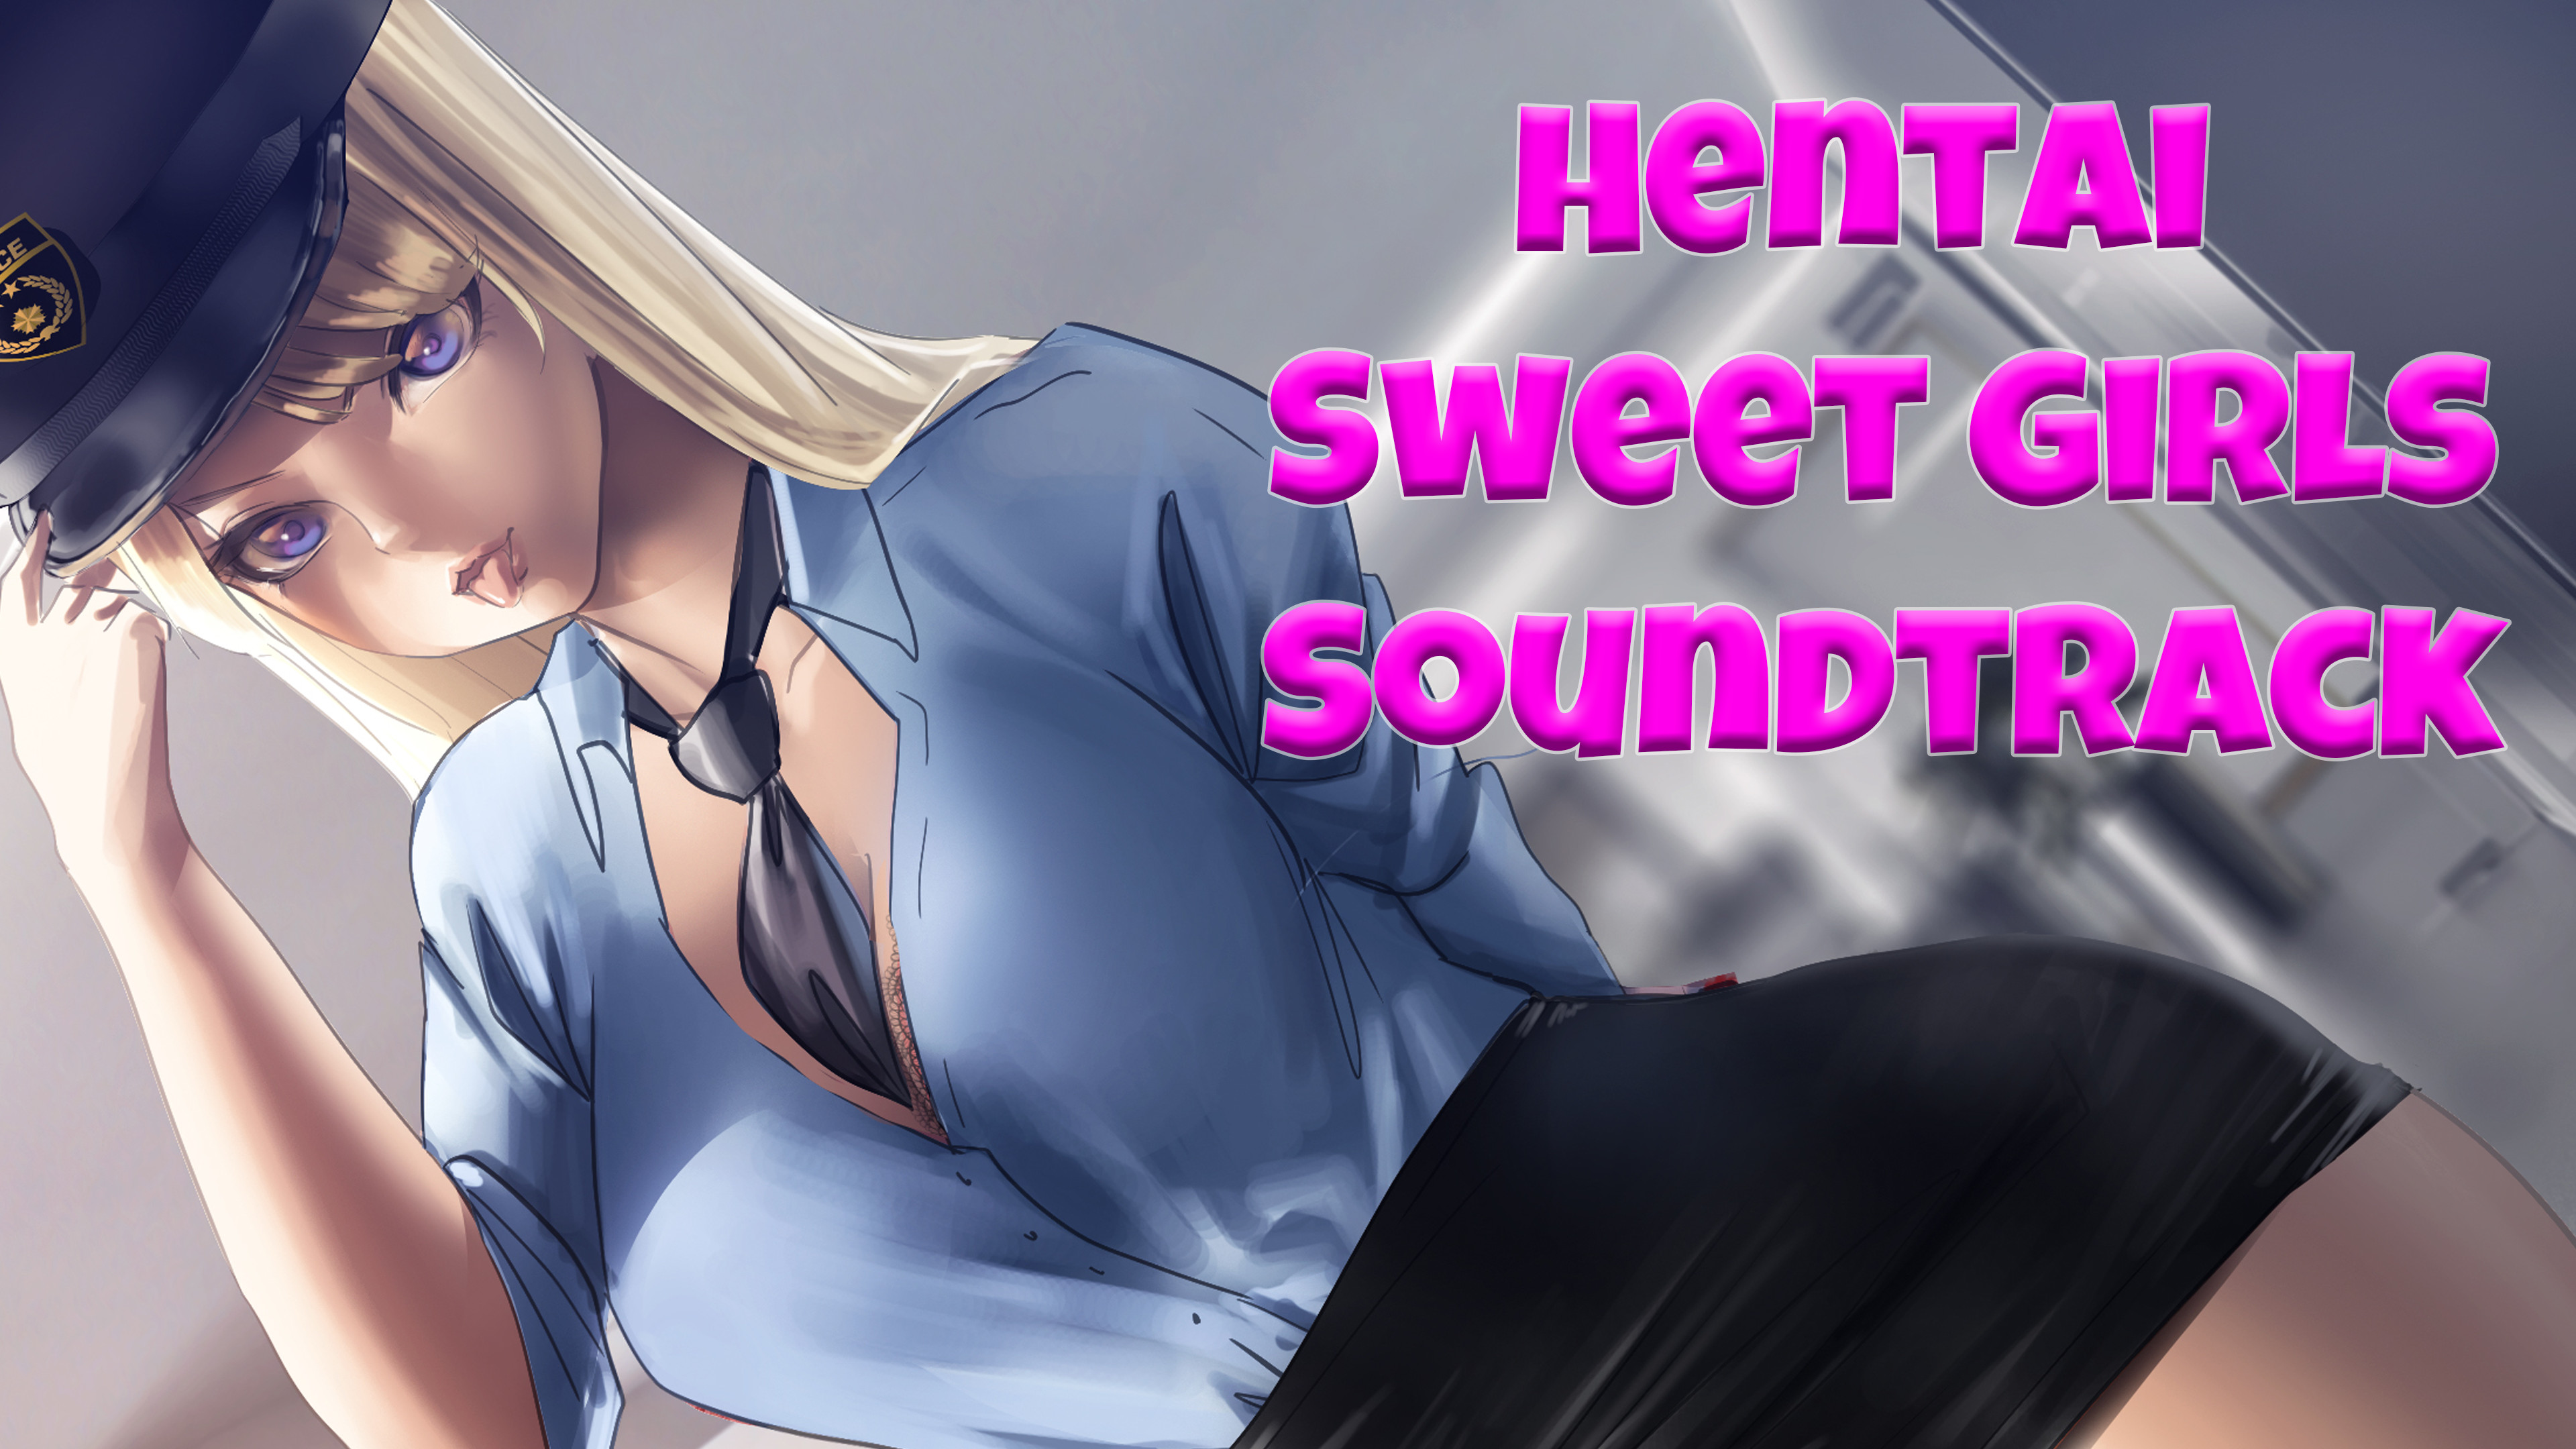 Hentai Sweet Girls - Soundtrack screenshot